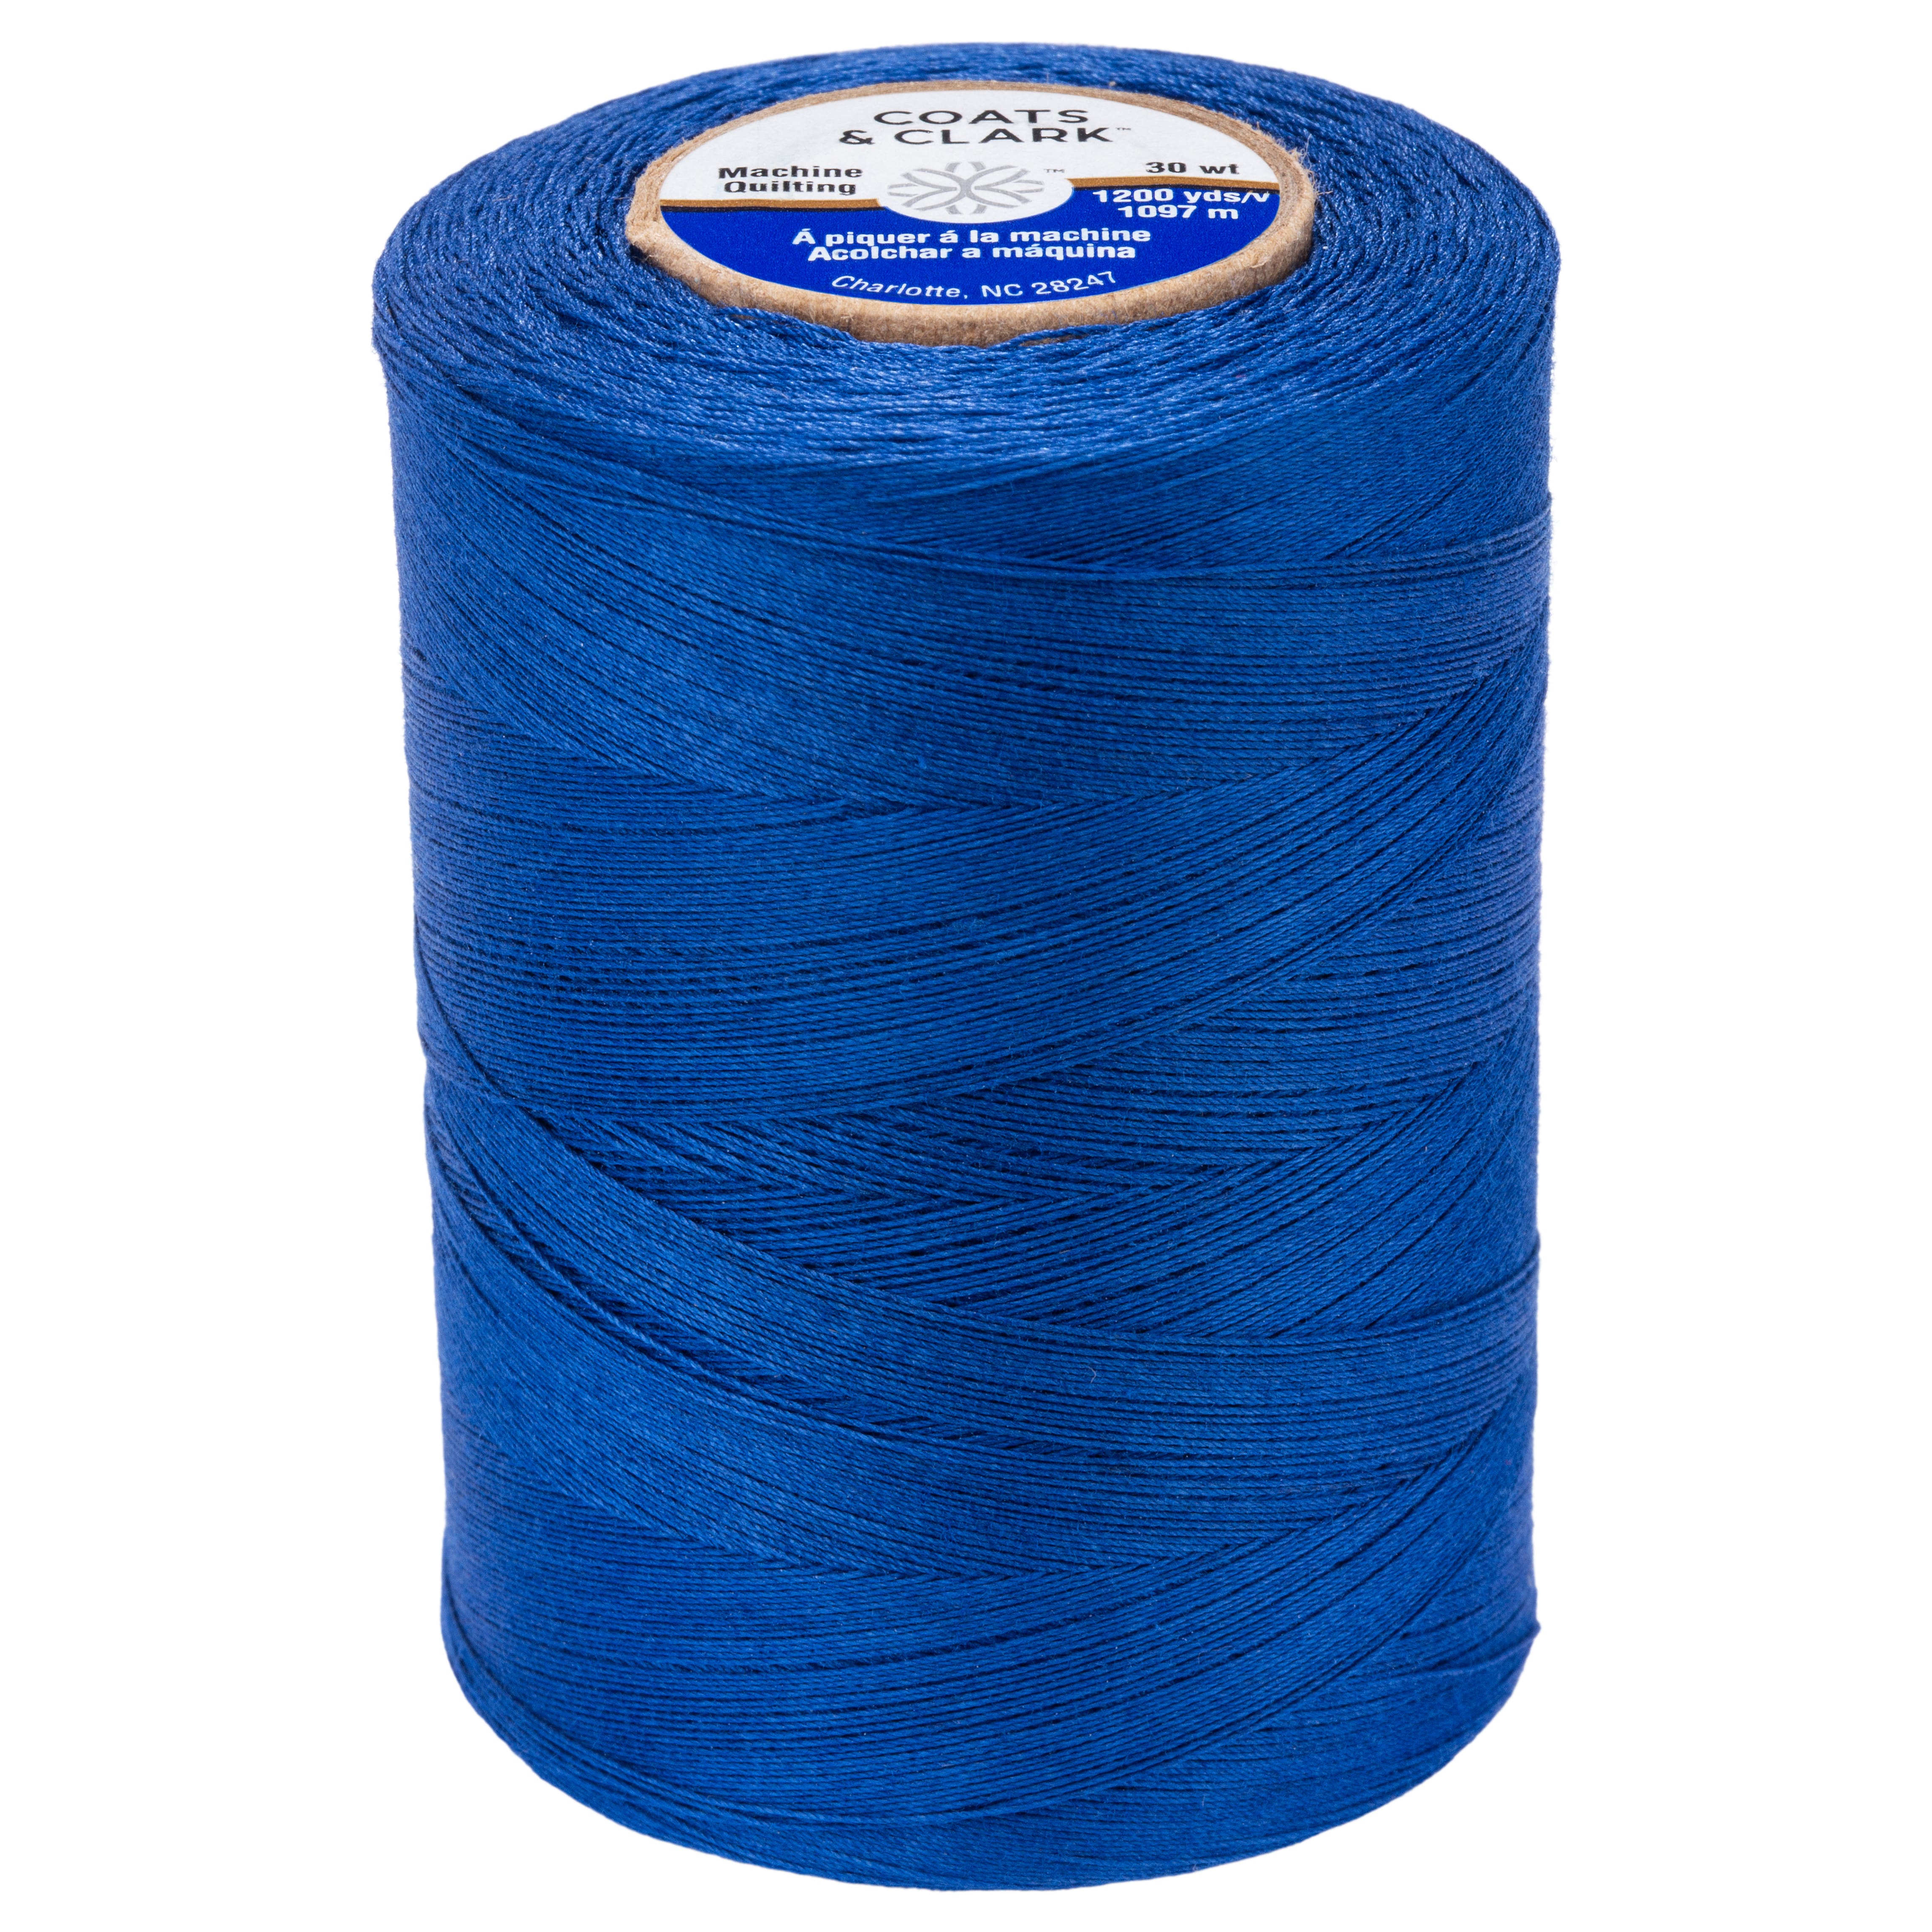 Coats & Clark Cotton Machine Quilting Multicolor Thread (225 Yards)